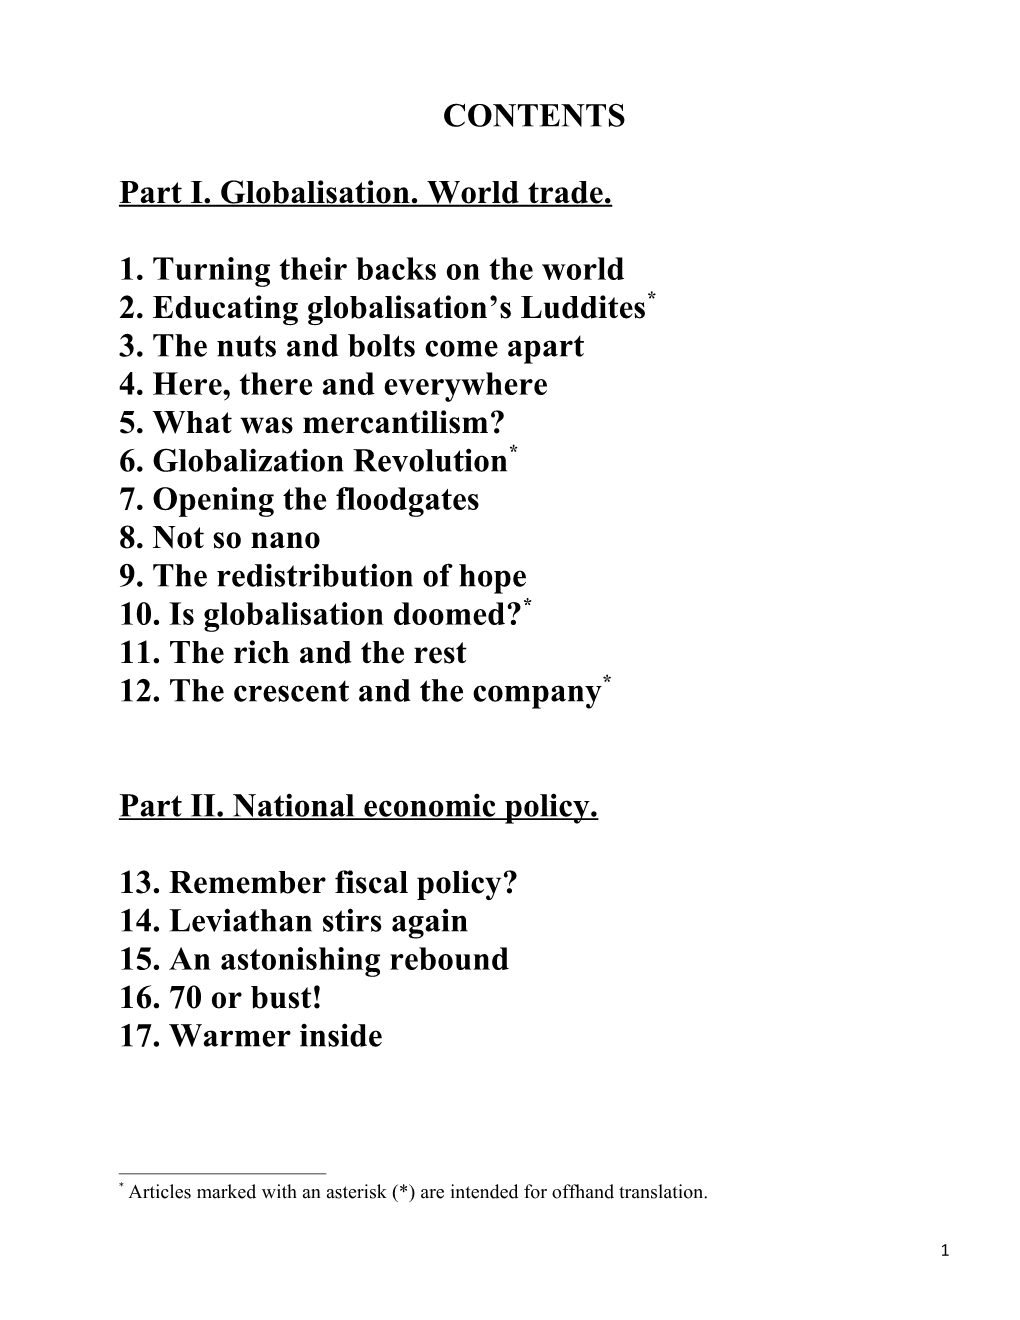 Part I. Globalisation. World Trade